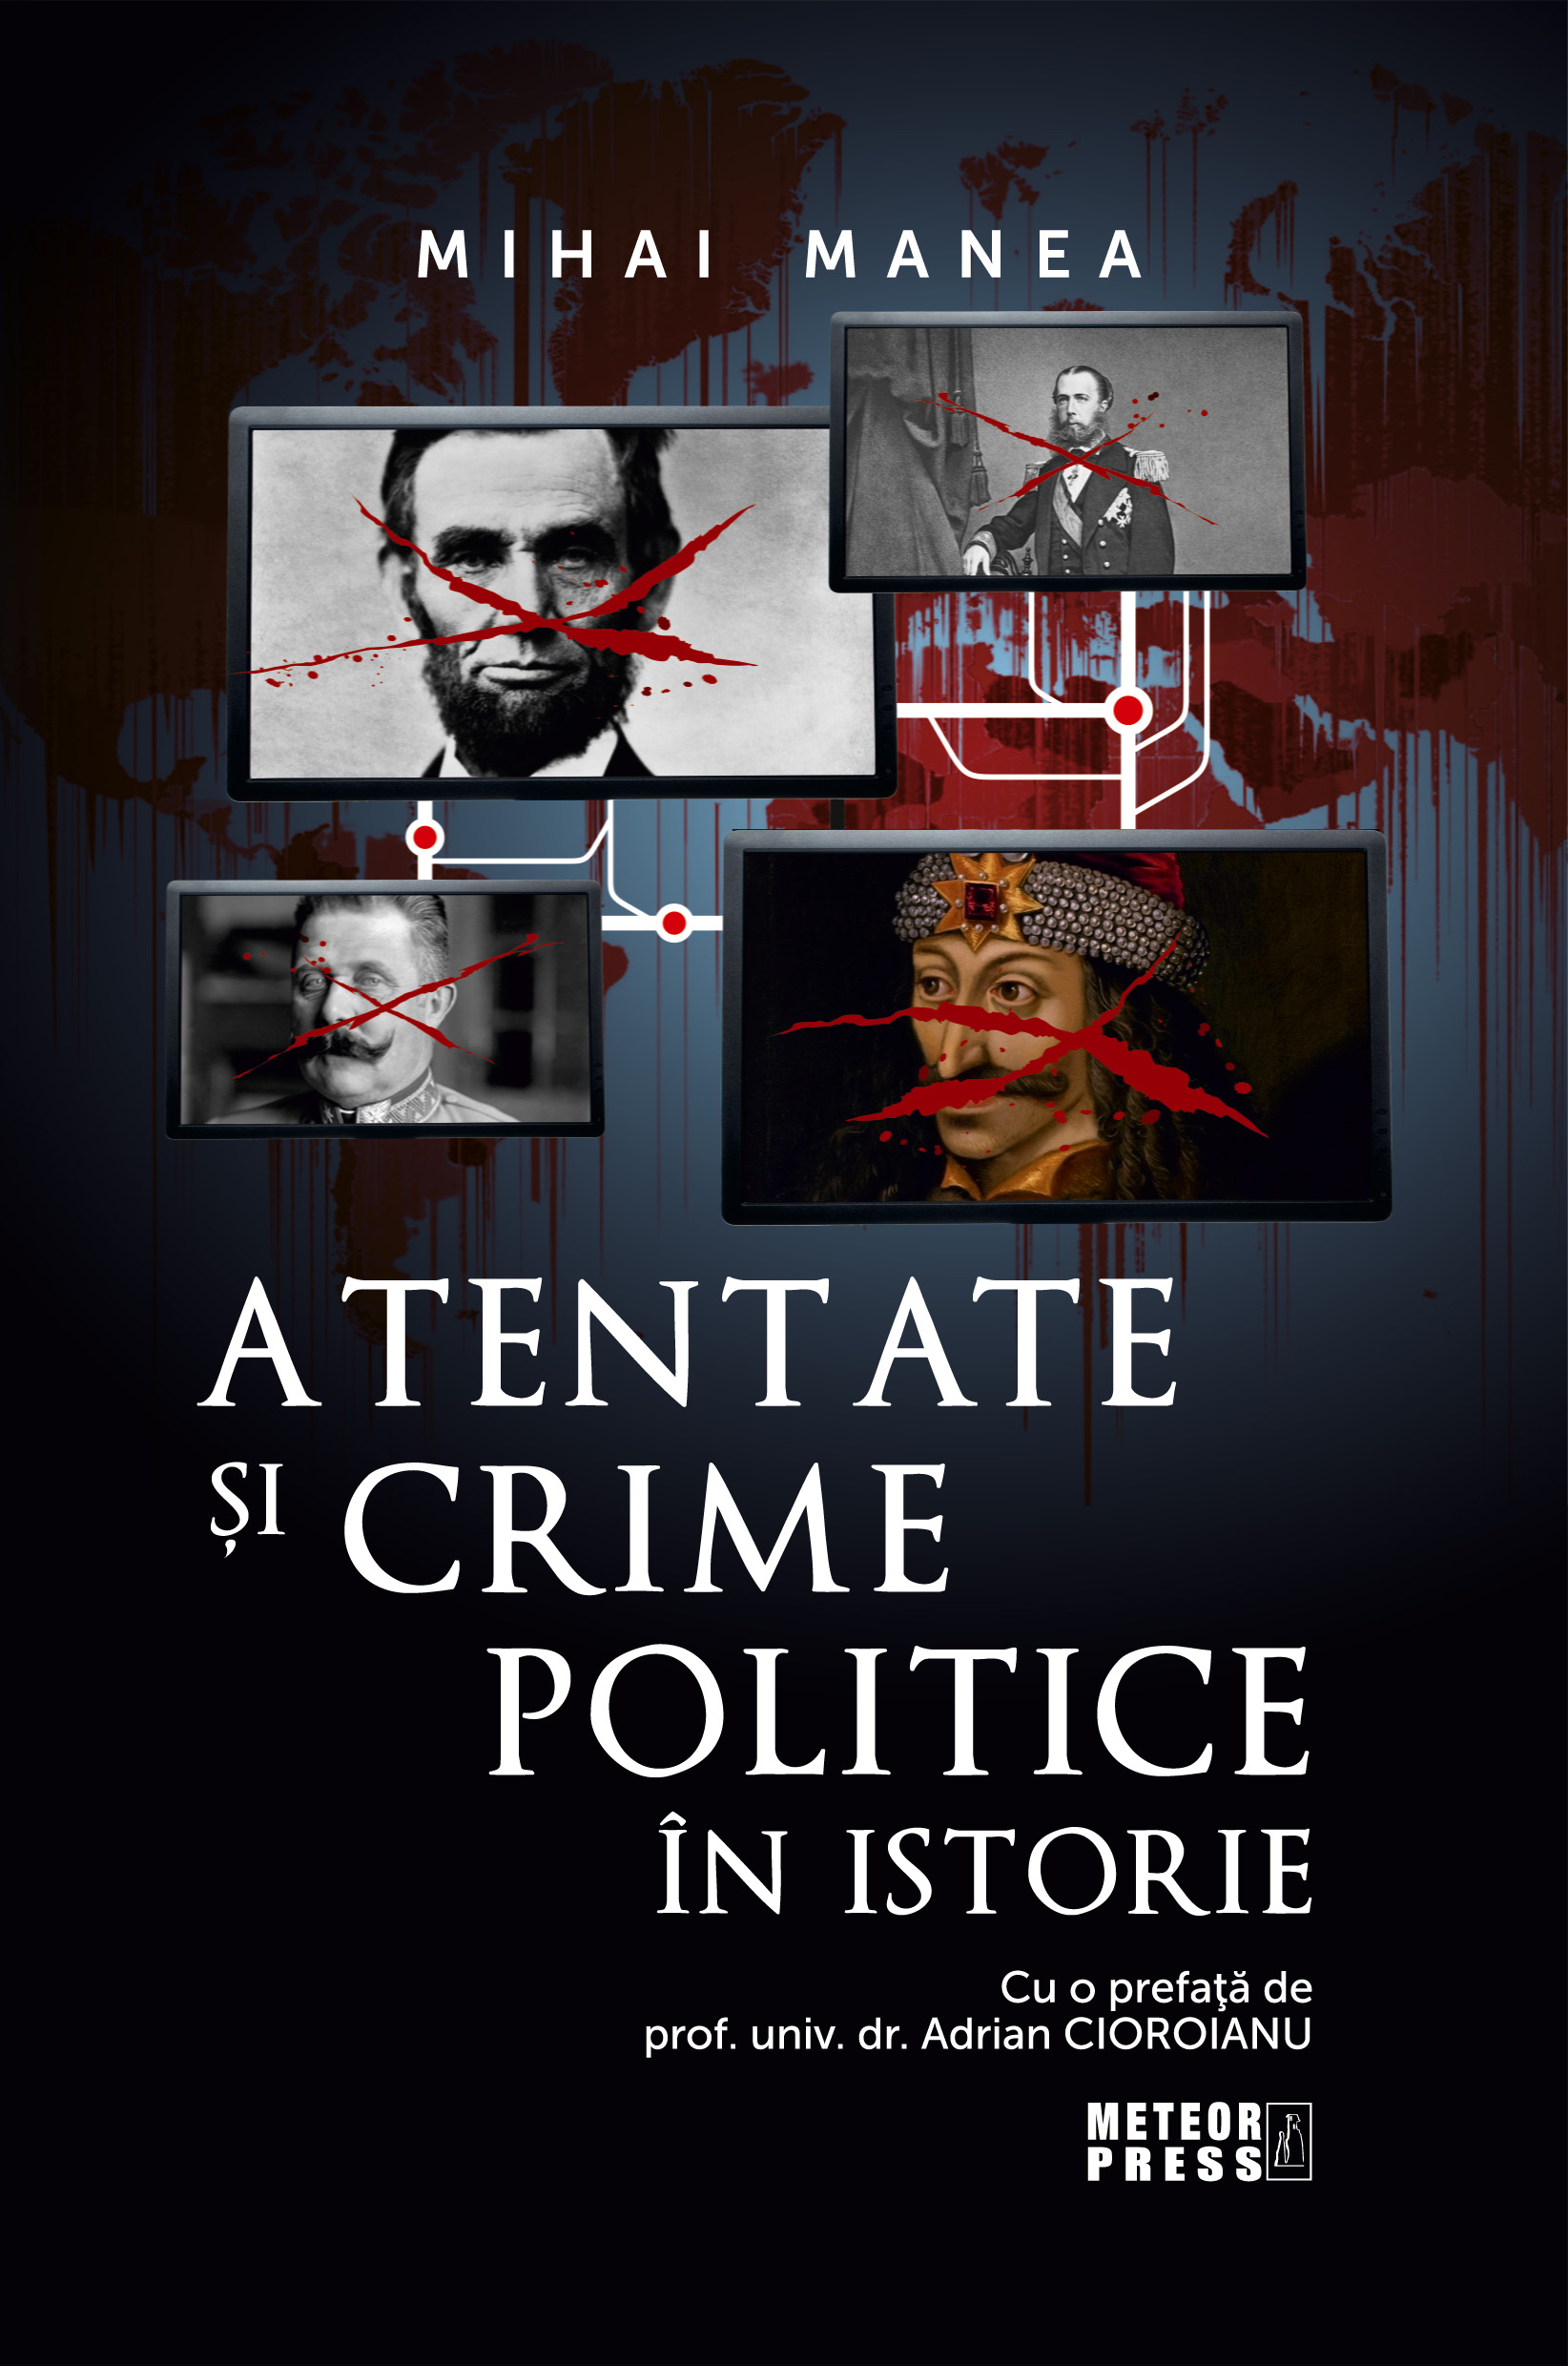 Atentate si crime politice in istorie | Mihai Manea atentate imagine 2022